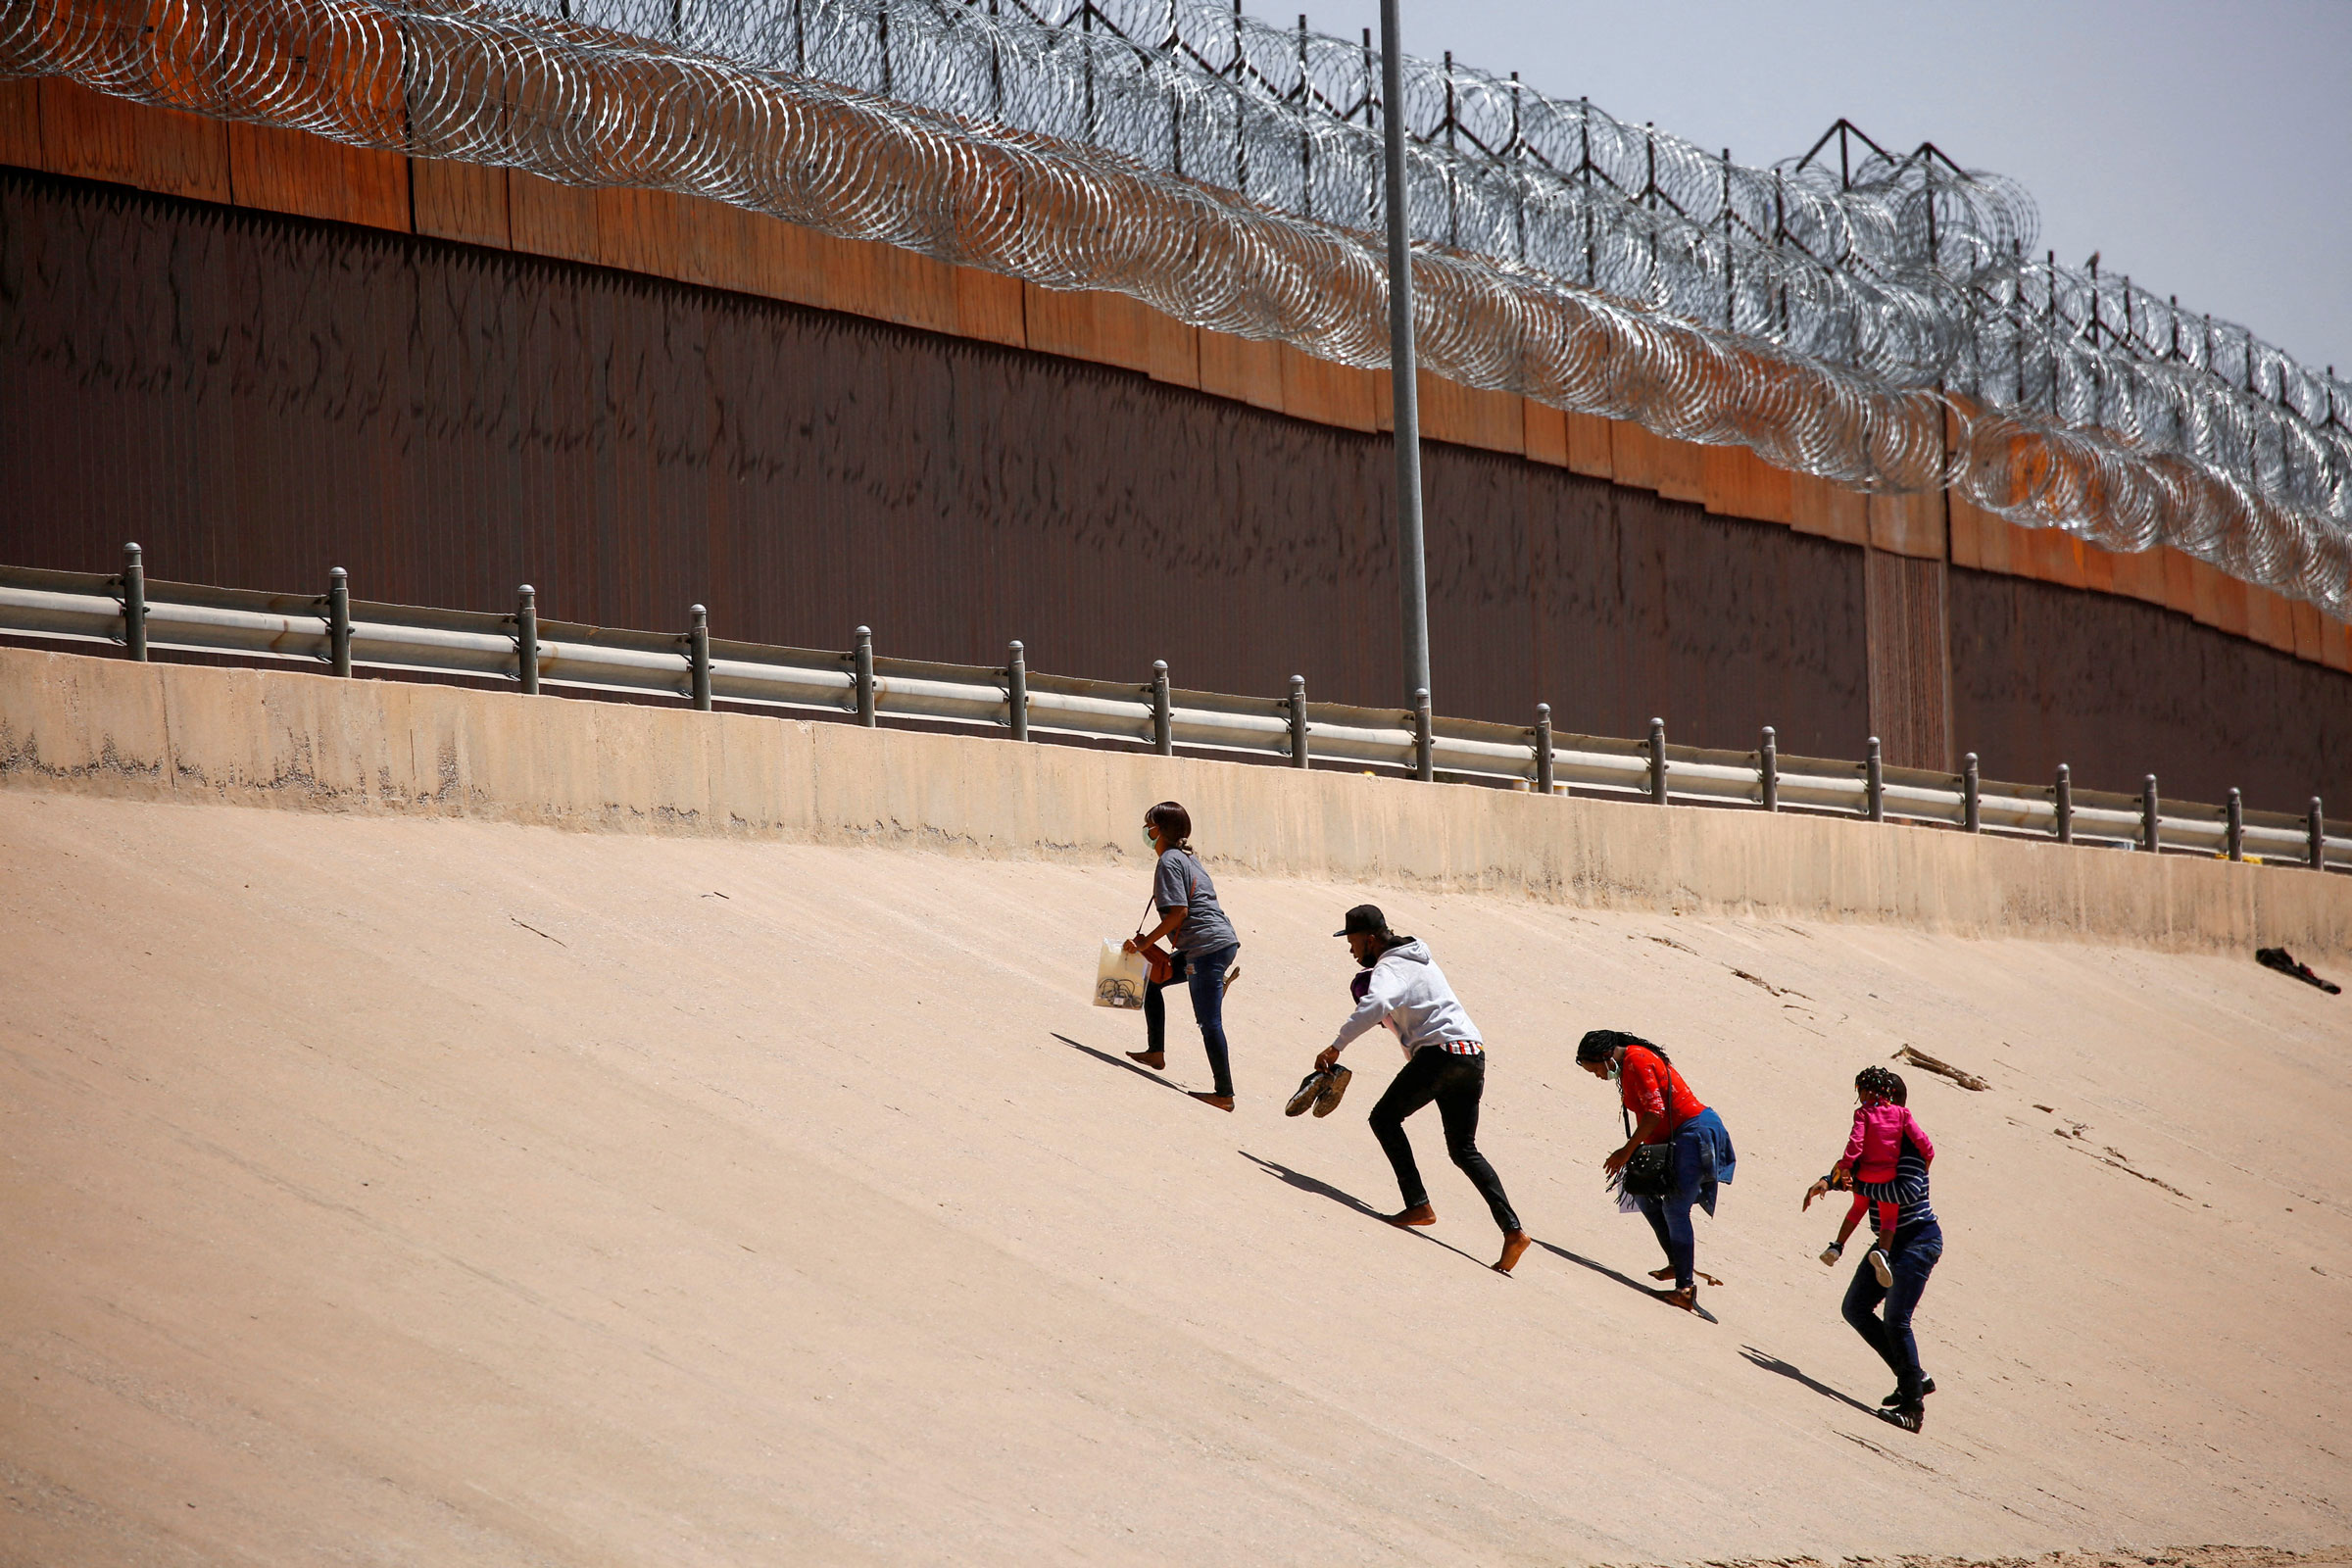 Asylum-seeking migrants walk near the border wall after crossing the Rio Bravo river, in El Paso, Texas